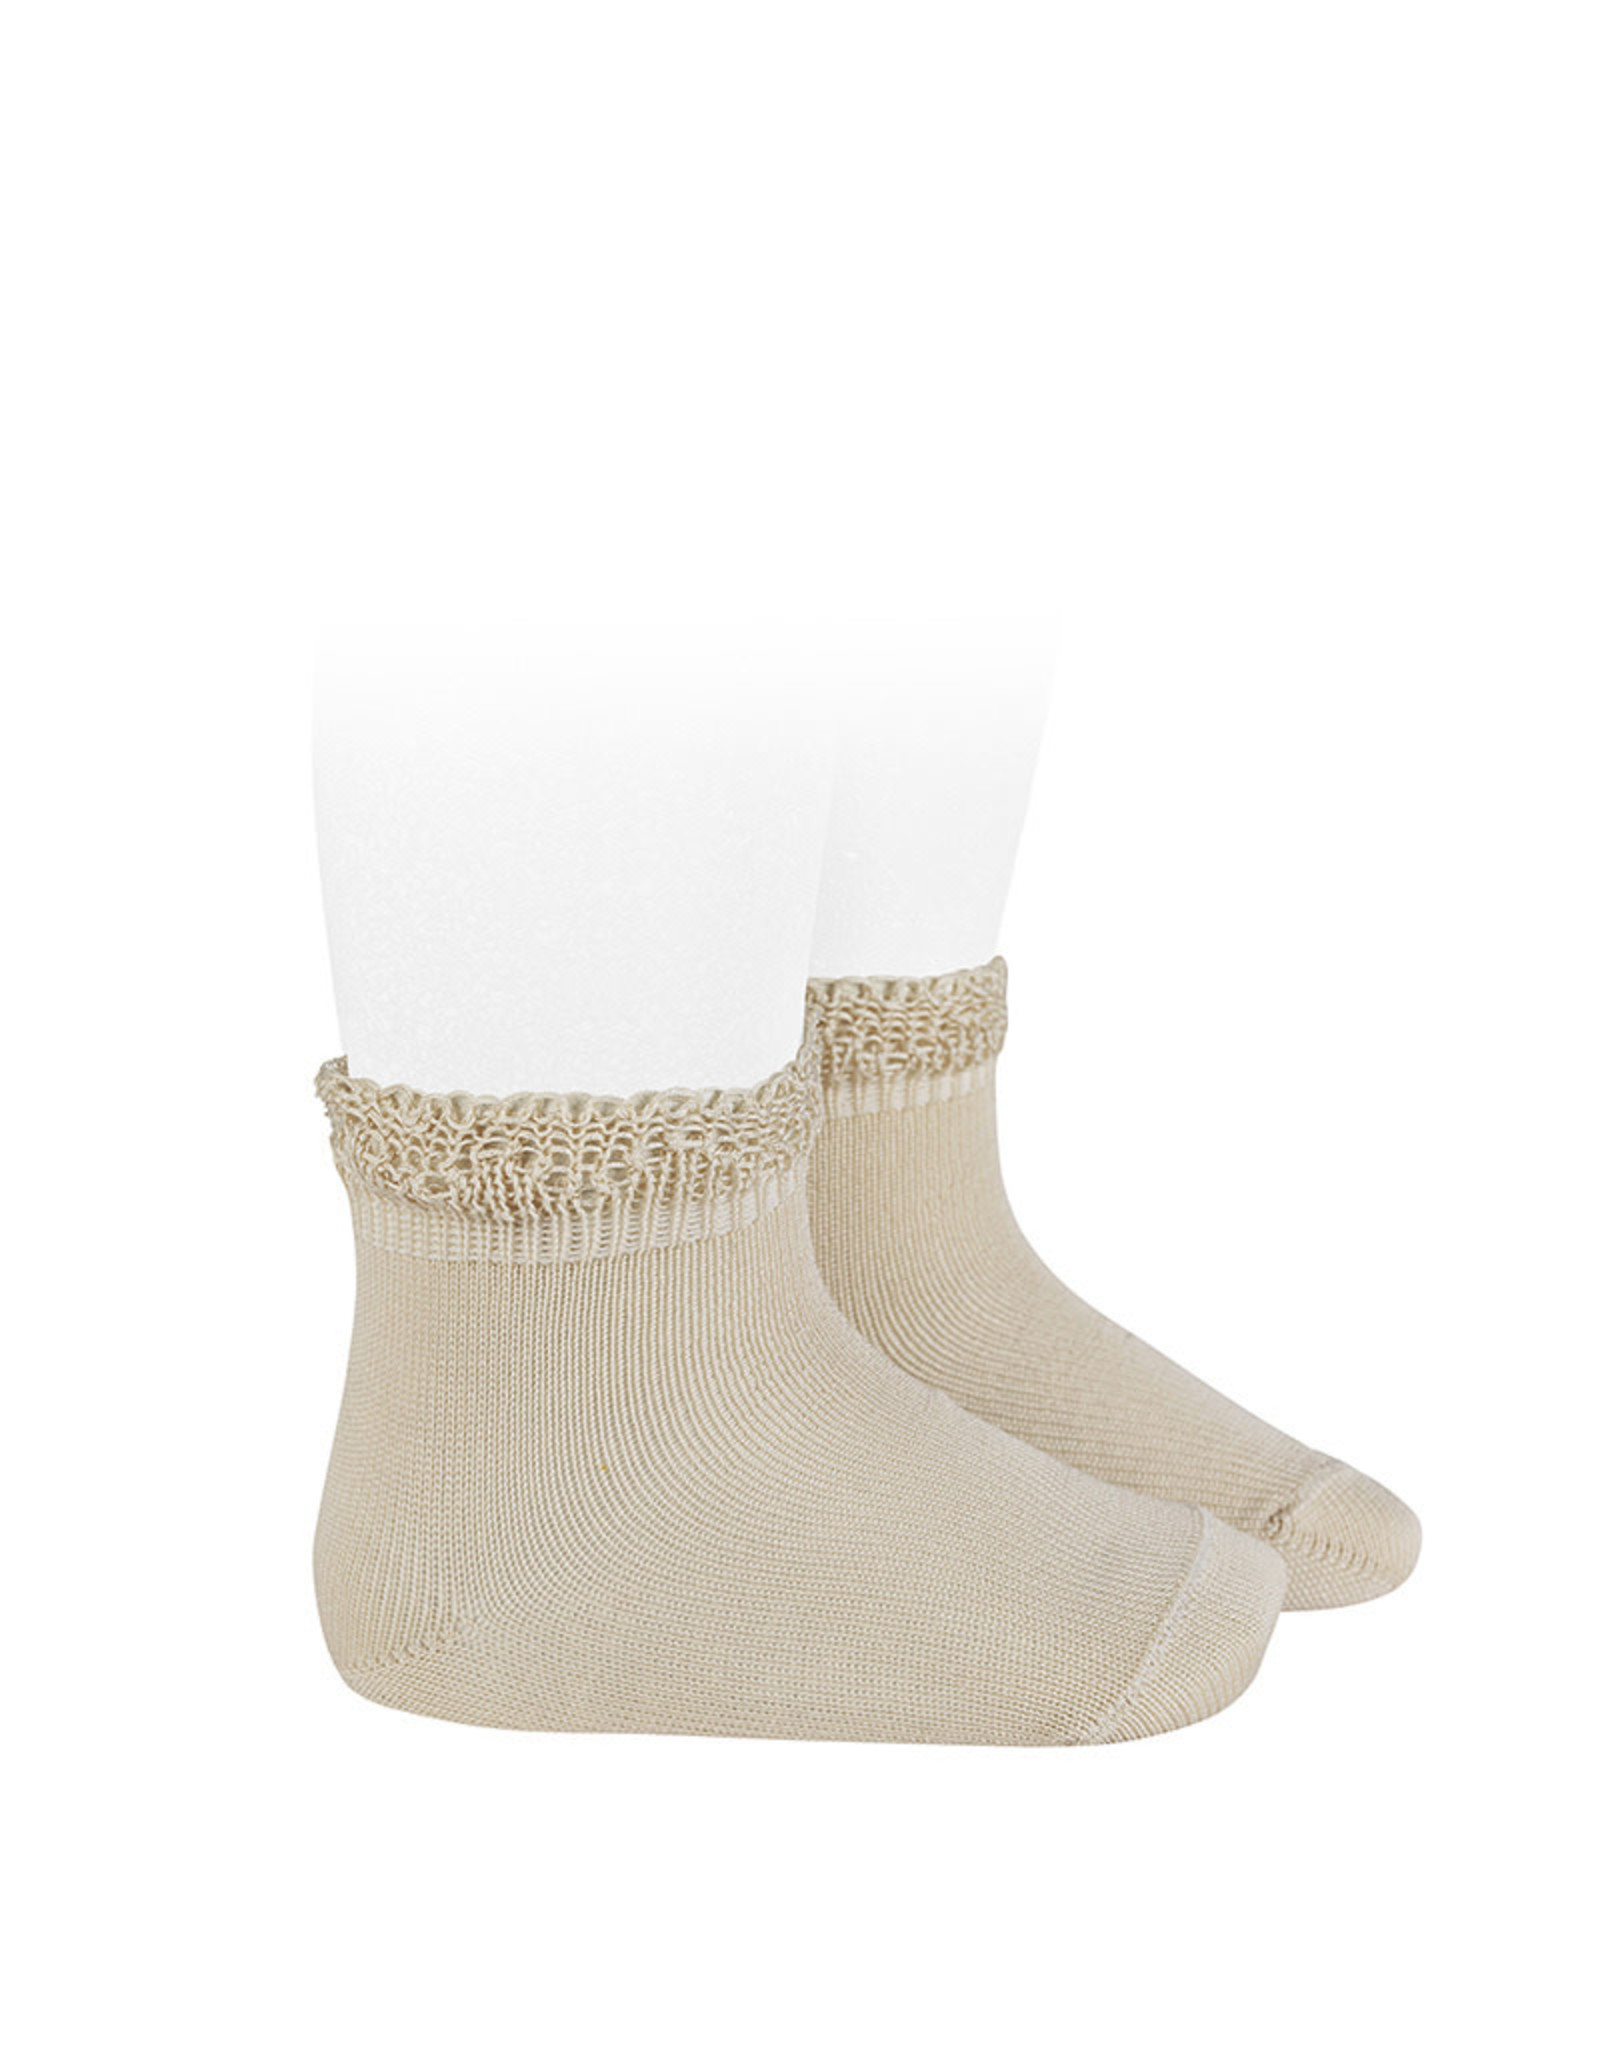 CONDOR Linen Openwork Cuff Short Socks